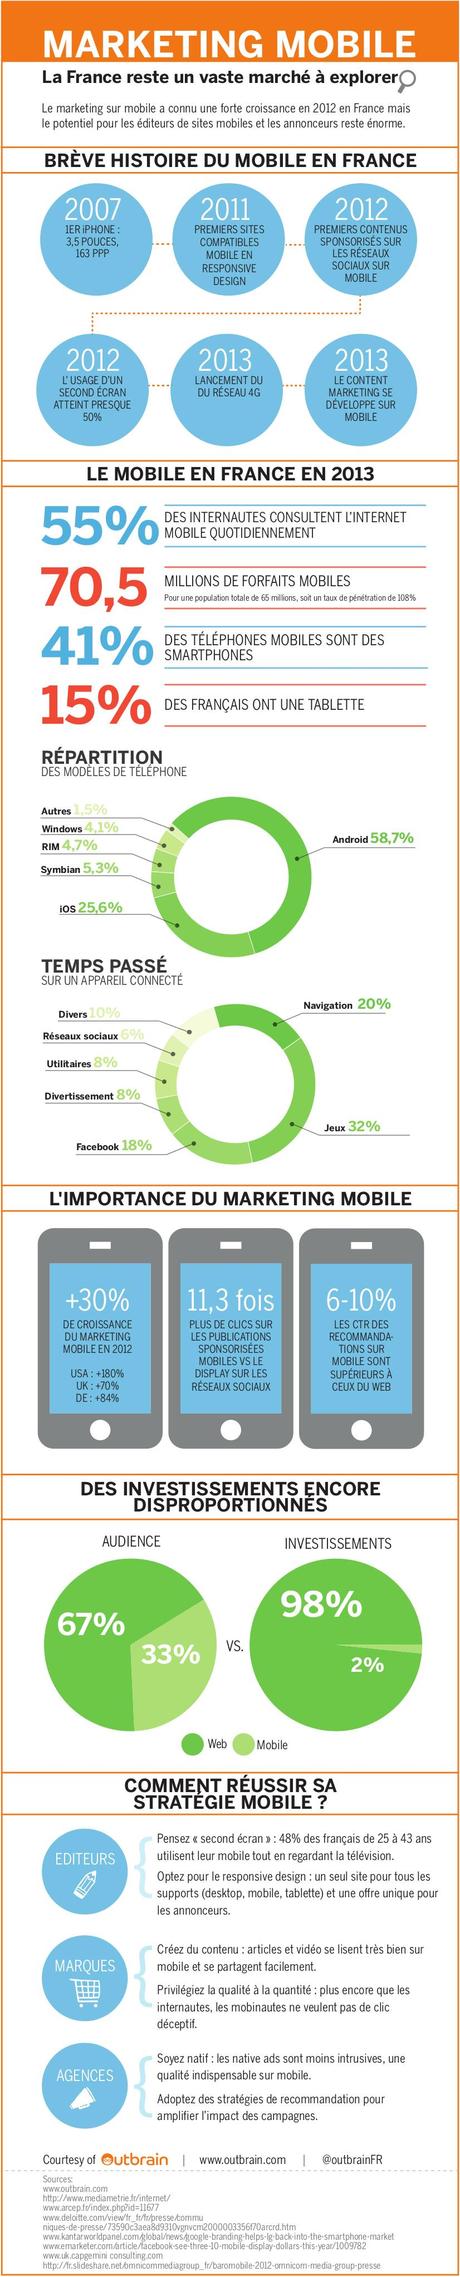 infographie stratégie e-commerce mobile